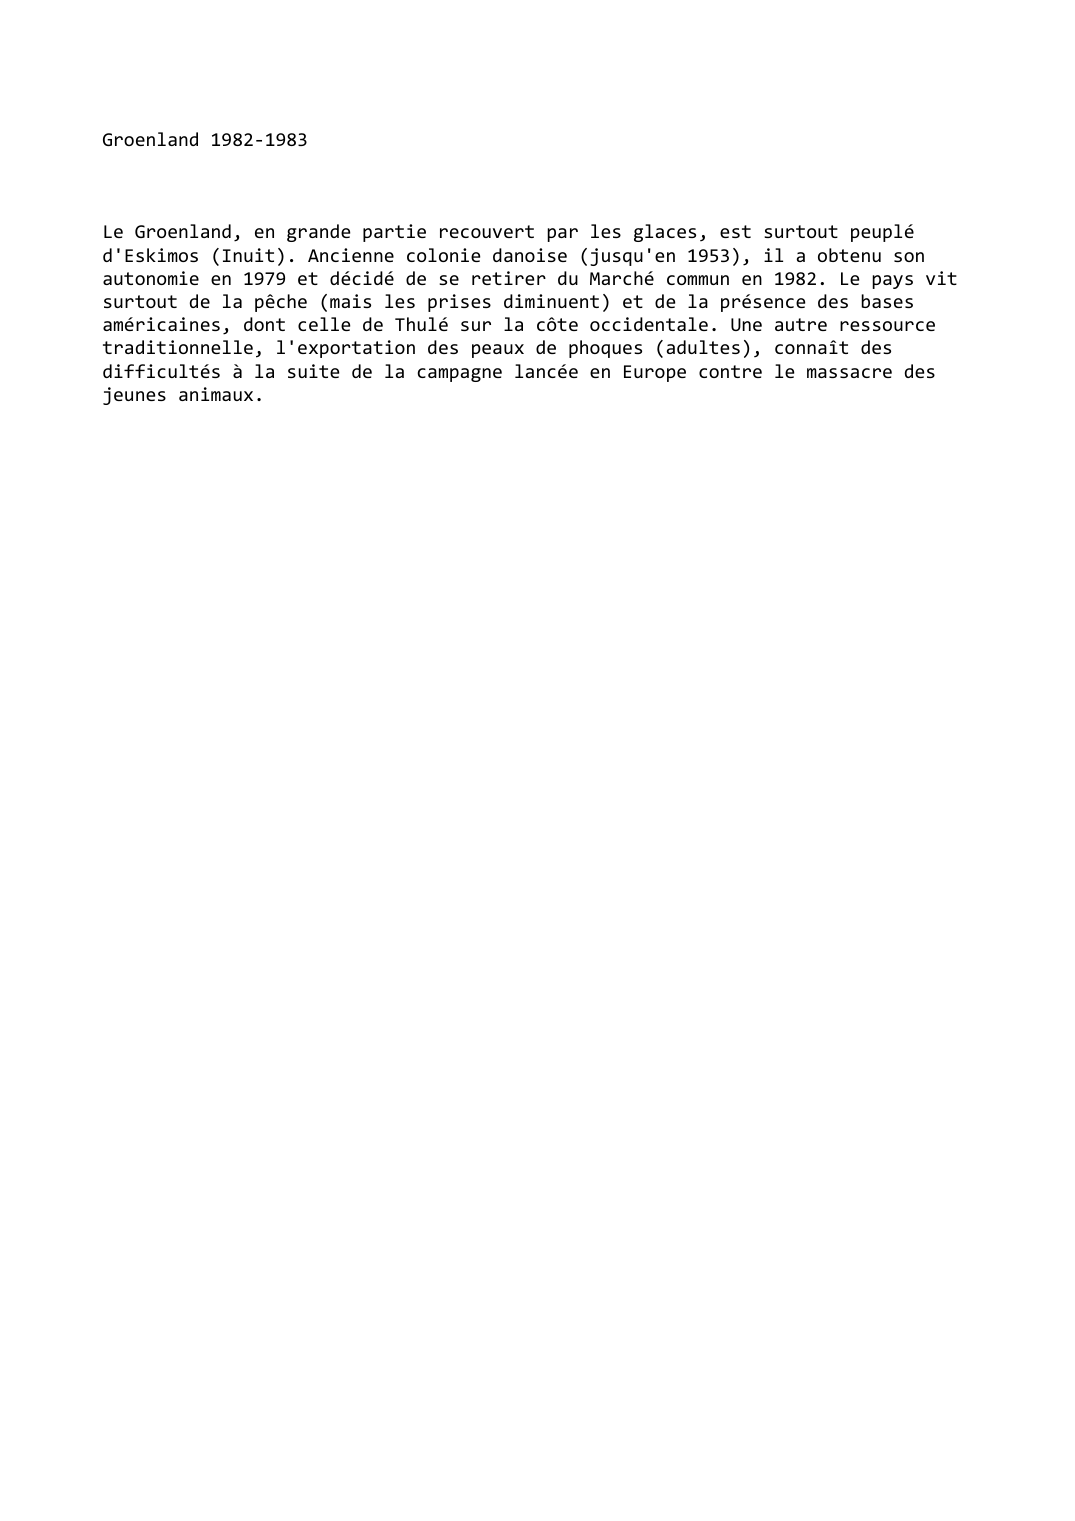 Prévisualisation du document Groenland (1982-1983)